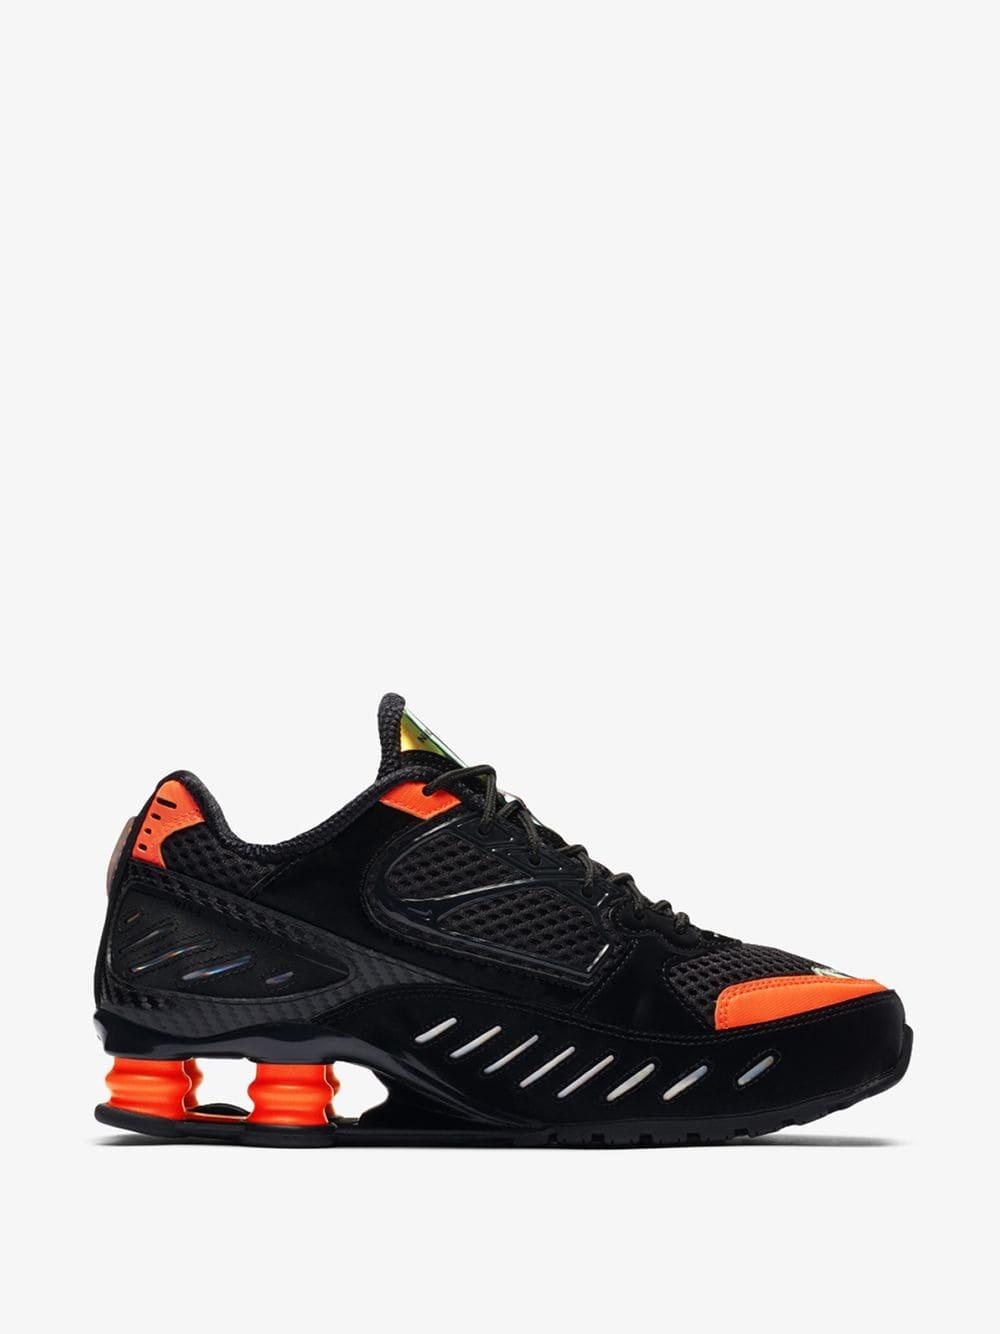 Nike Black And Orange Shox Enigma Sneakers for Men